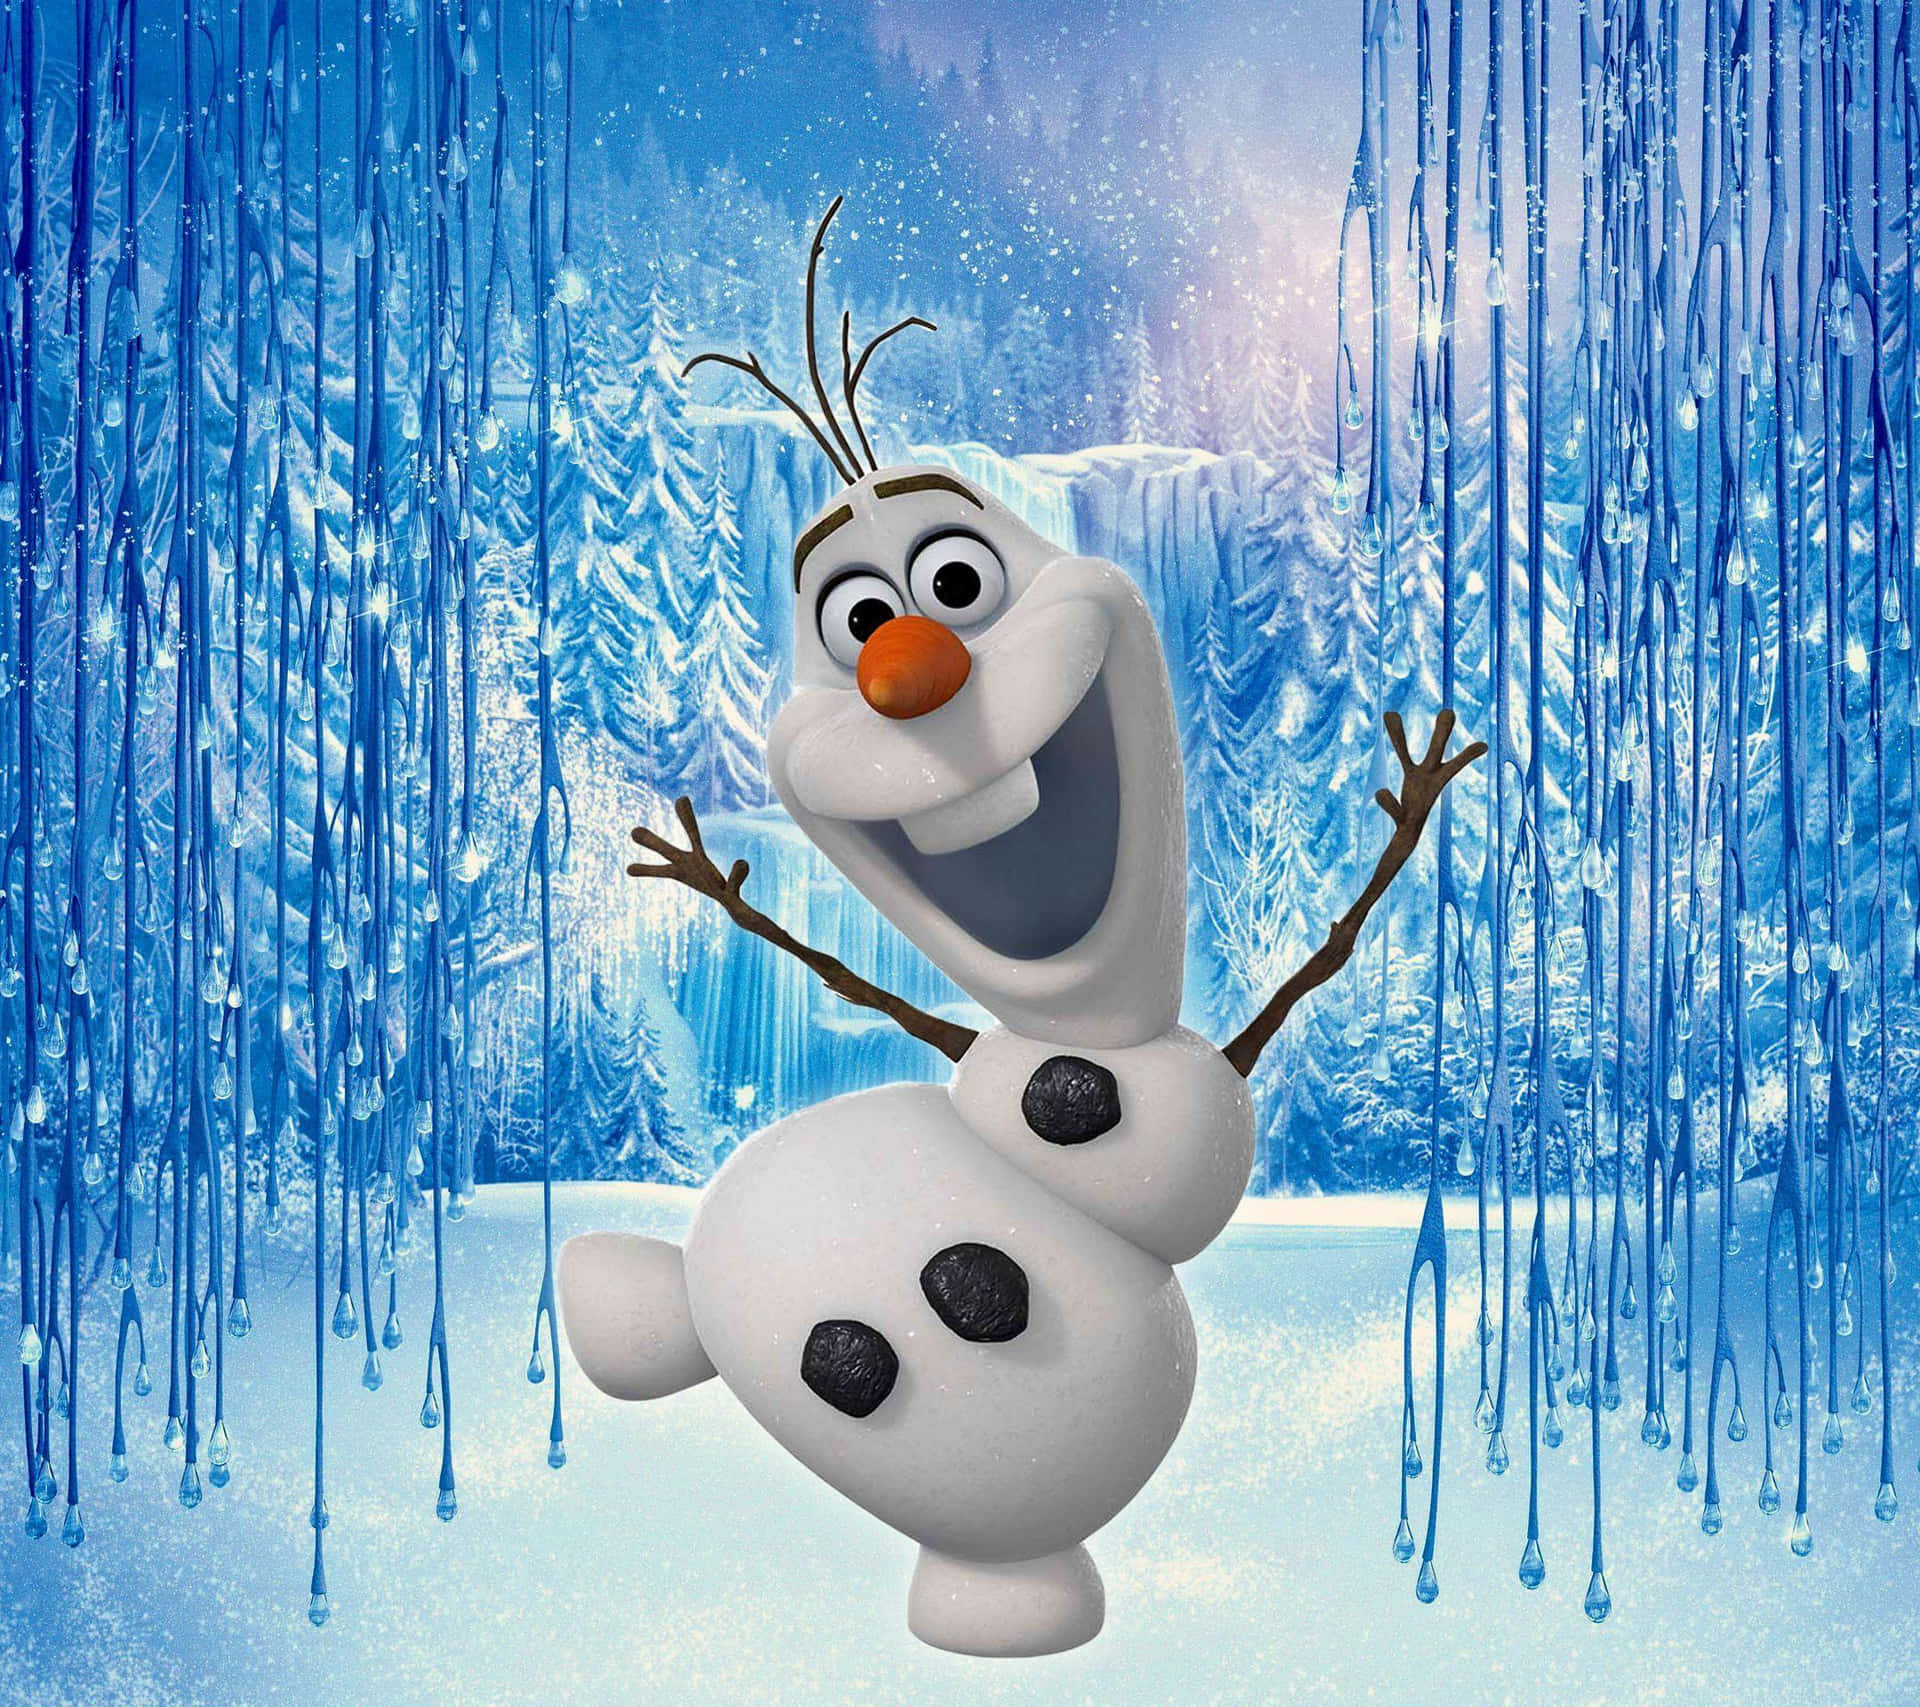 Wishing everyone a happy winter season with a snowman!